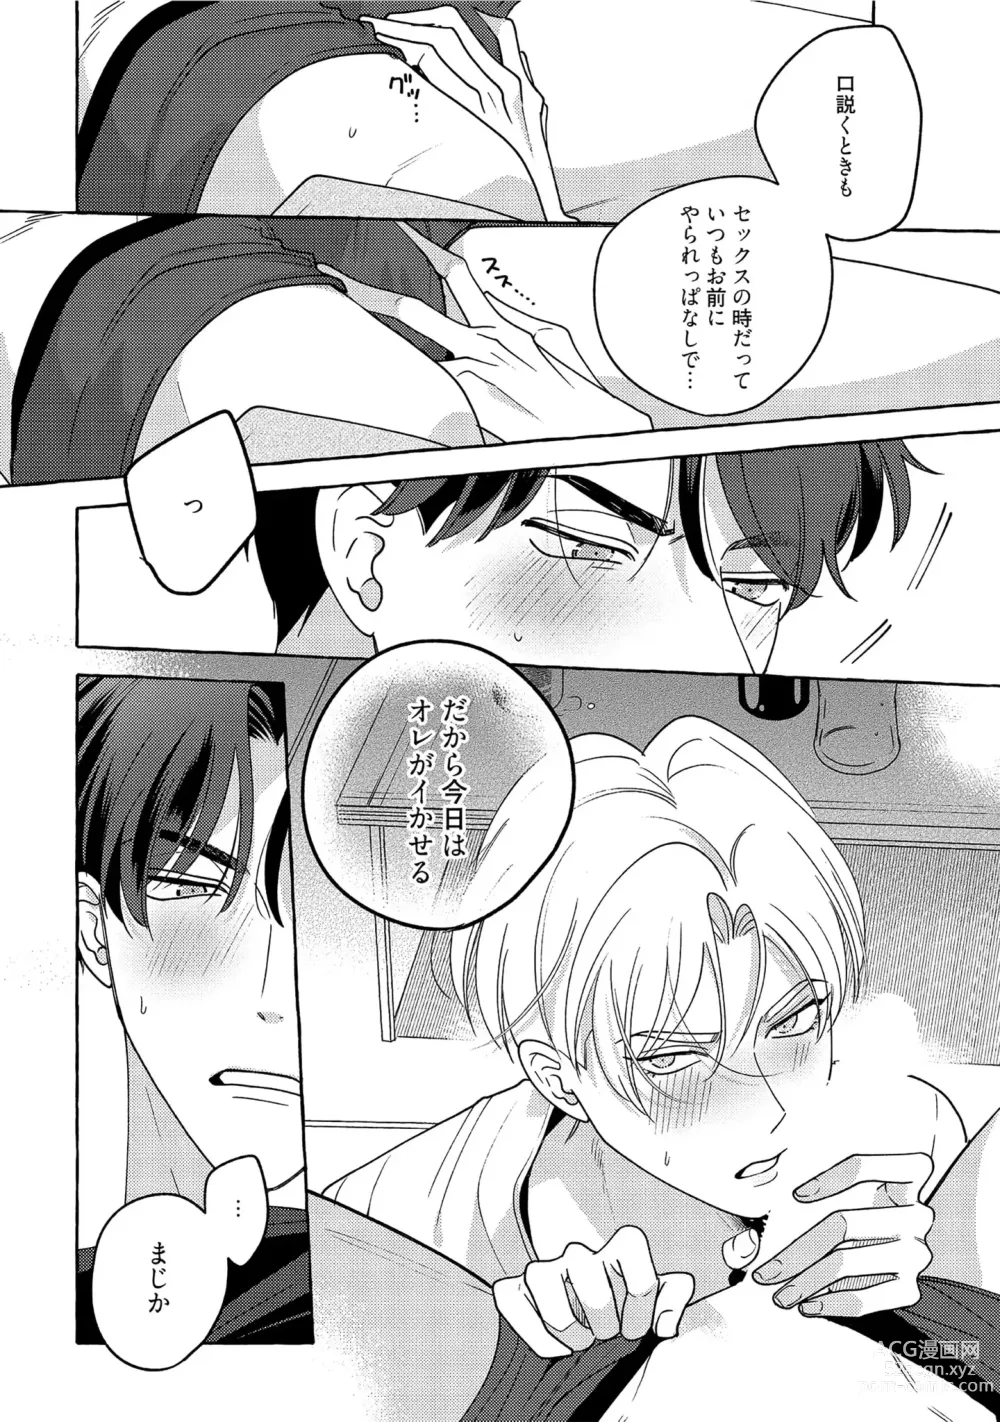 Page 236 of manga Fake Fact Lips